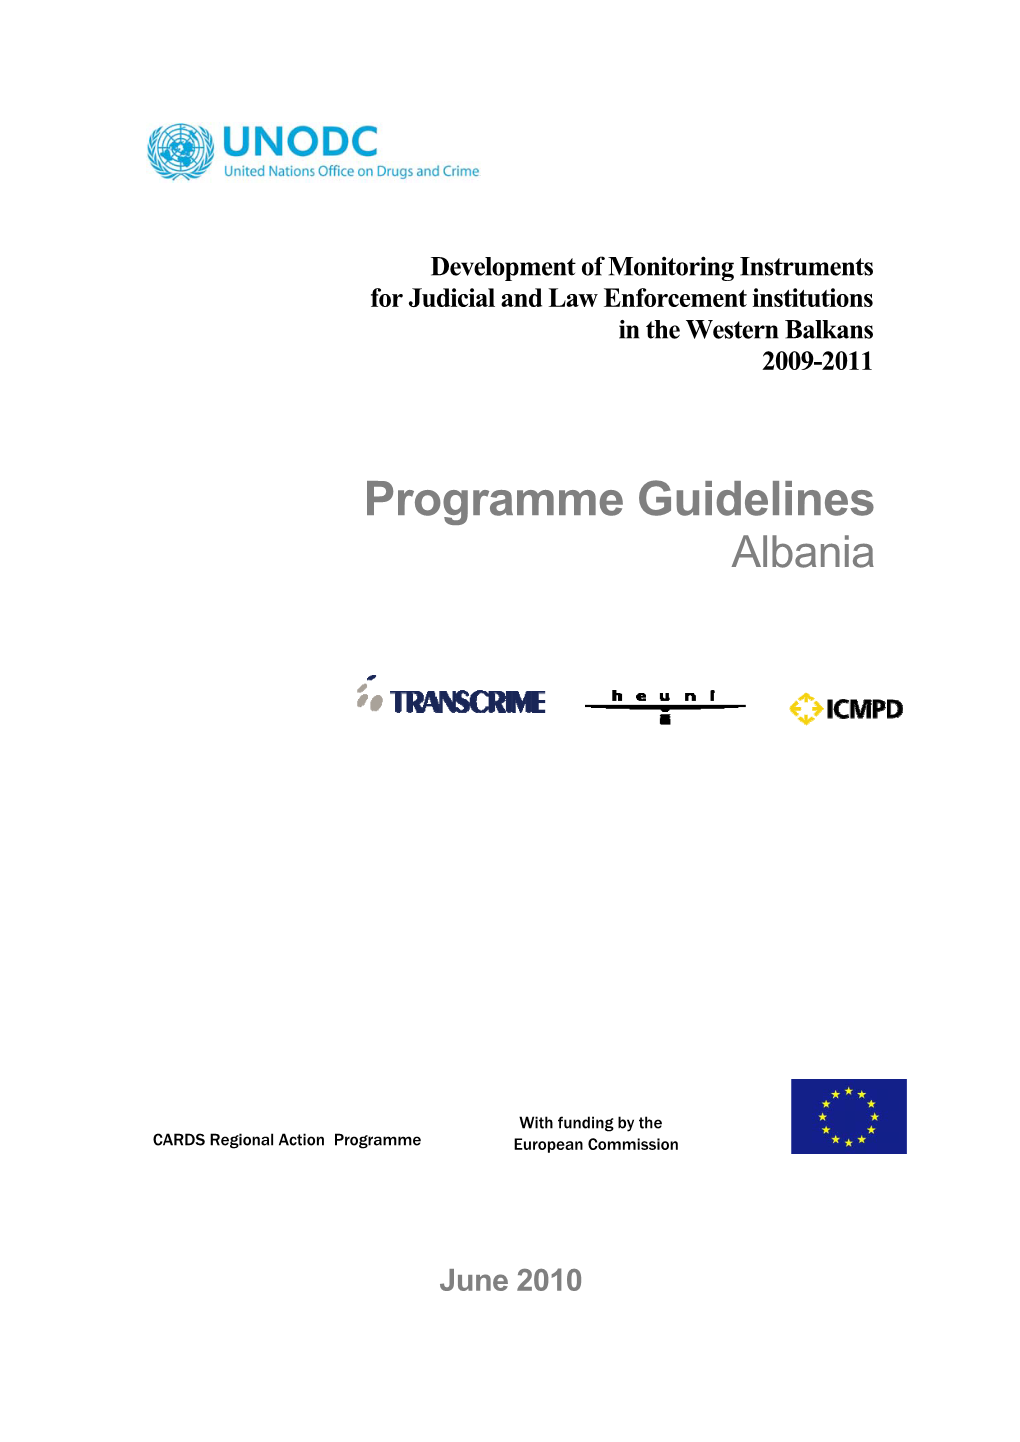 Programme Guidelines Albania